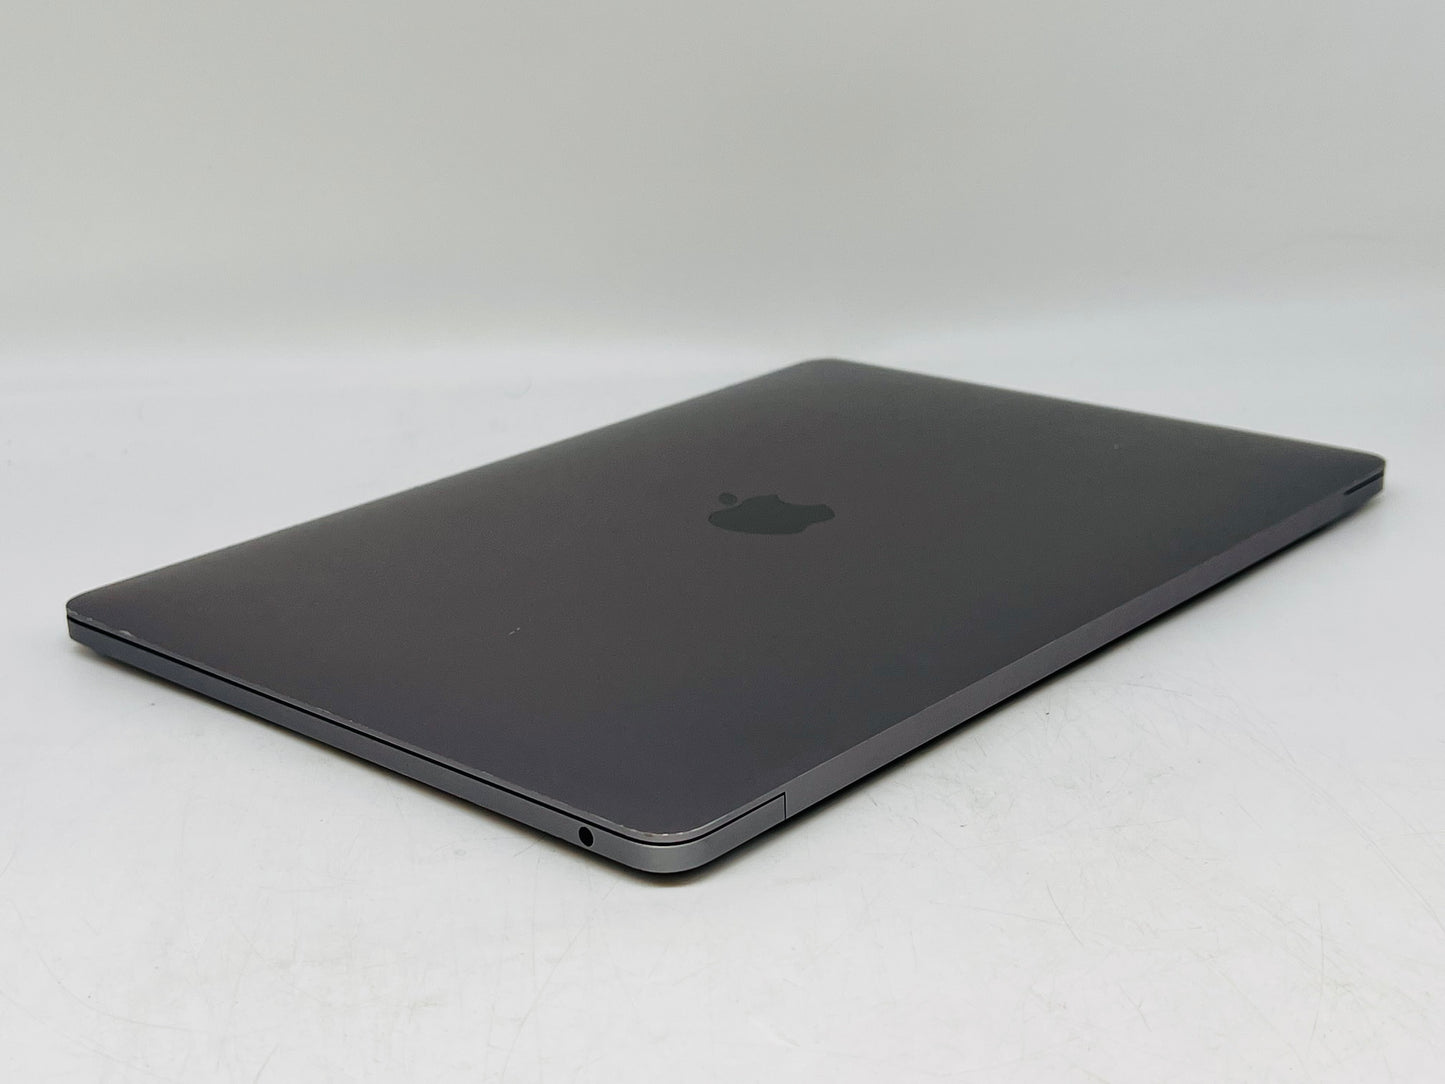 #2 Apple 2017 MacBook Pro 2.3GHz Dual-Core i5 8GB RAM 128GB SSD Space Gray (A)